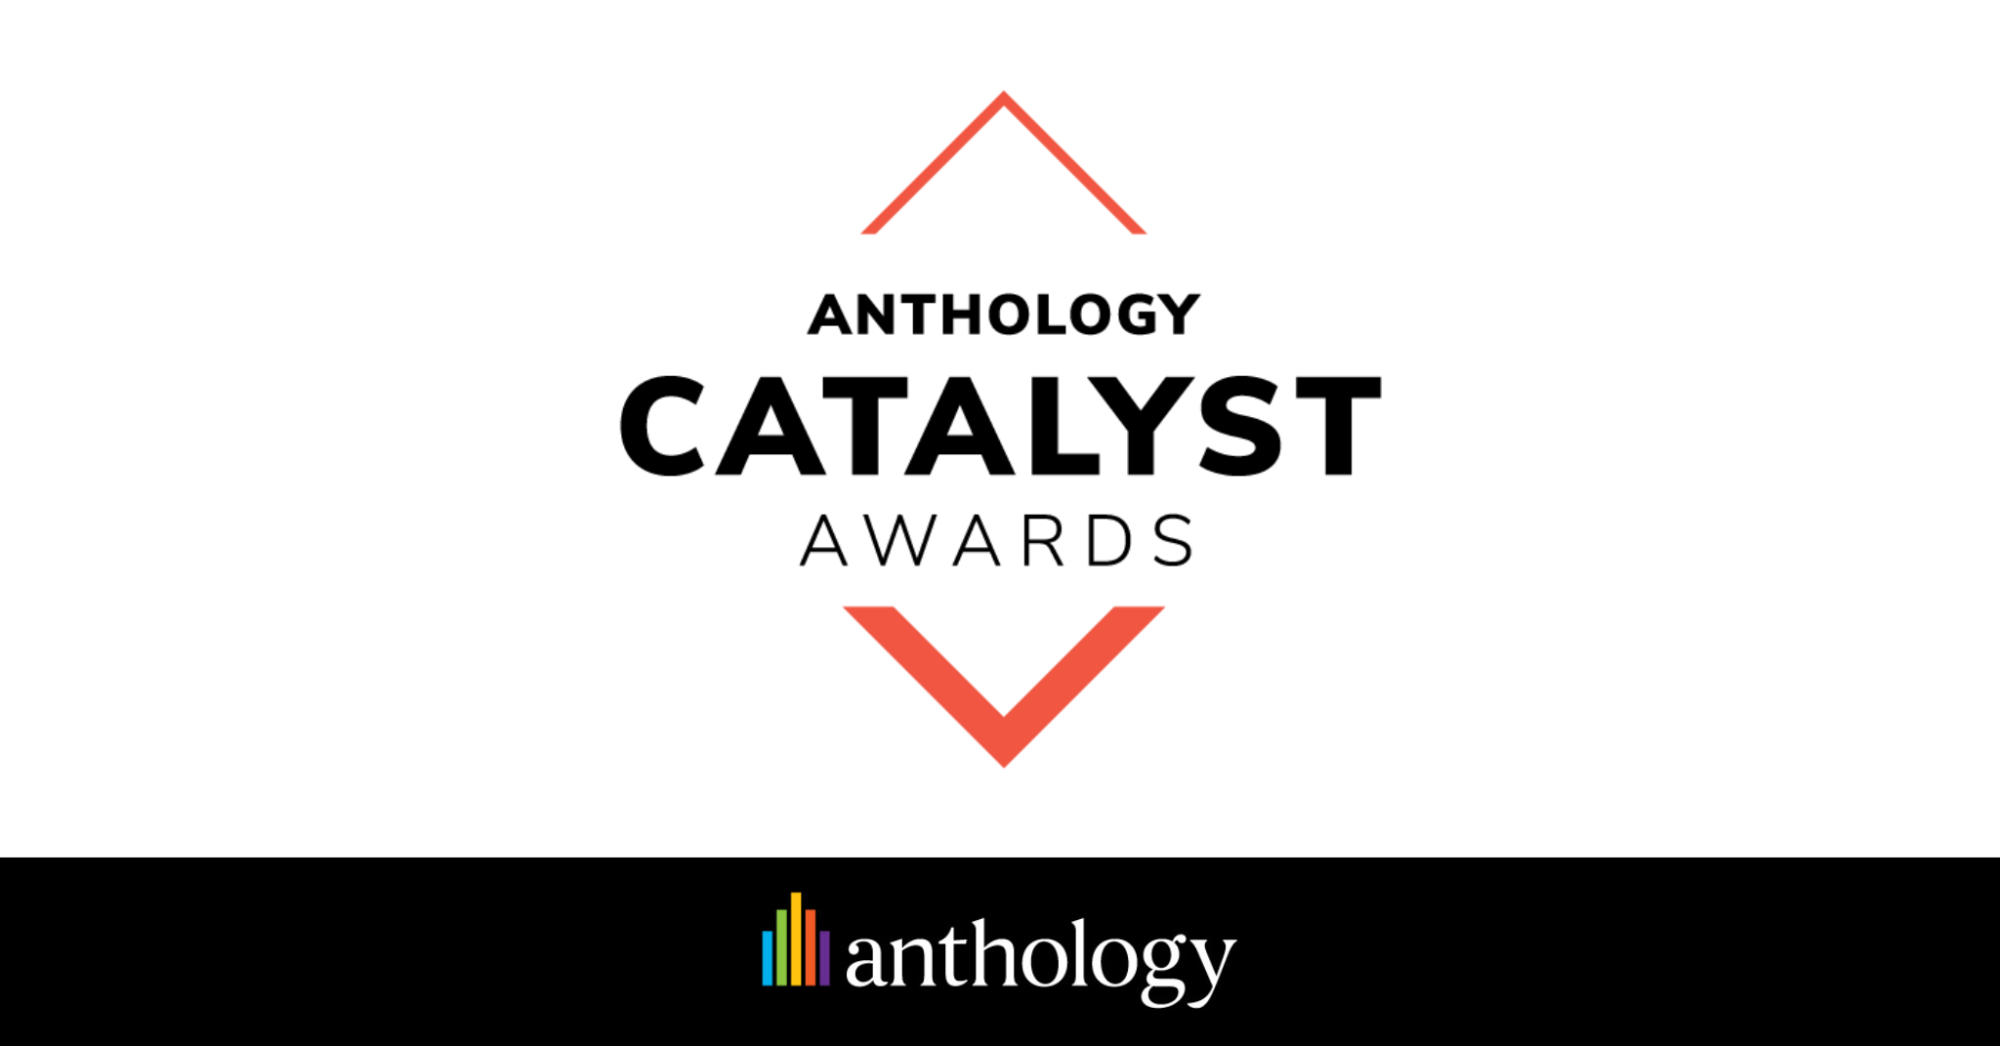 Catalyst awards logo